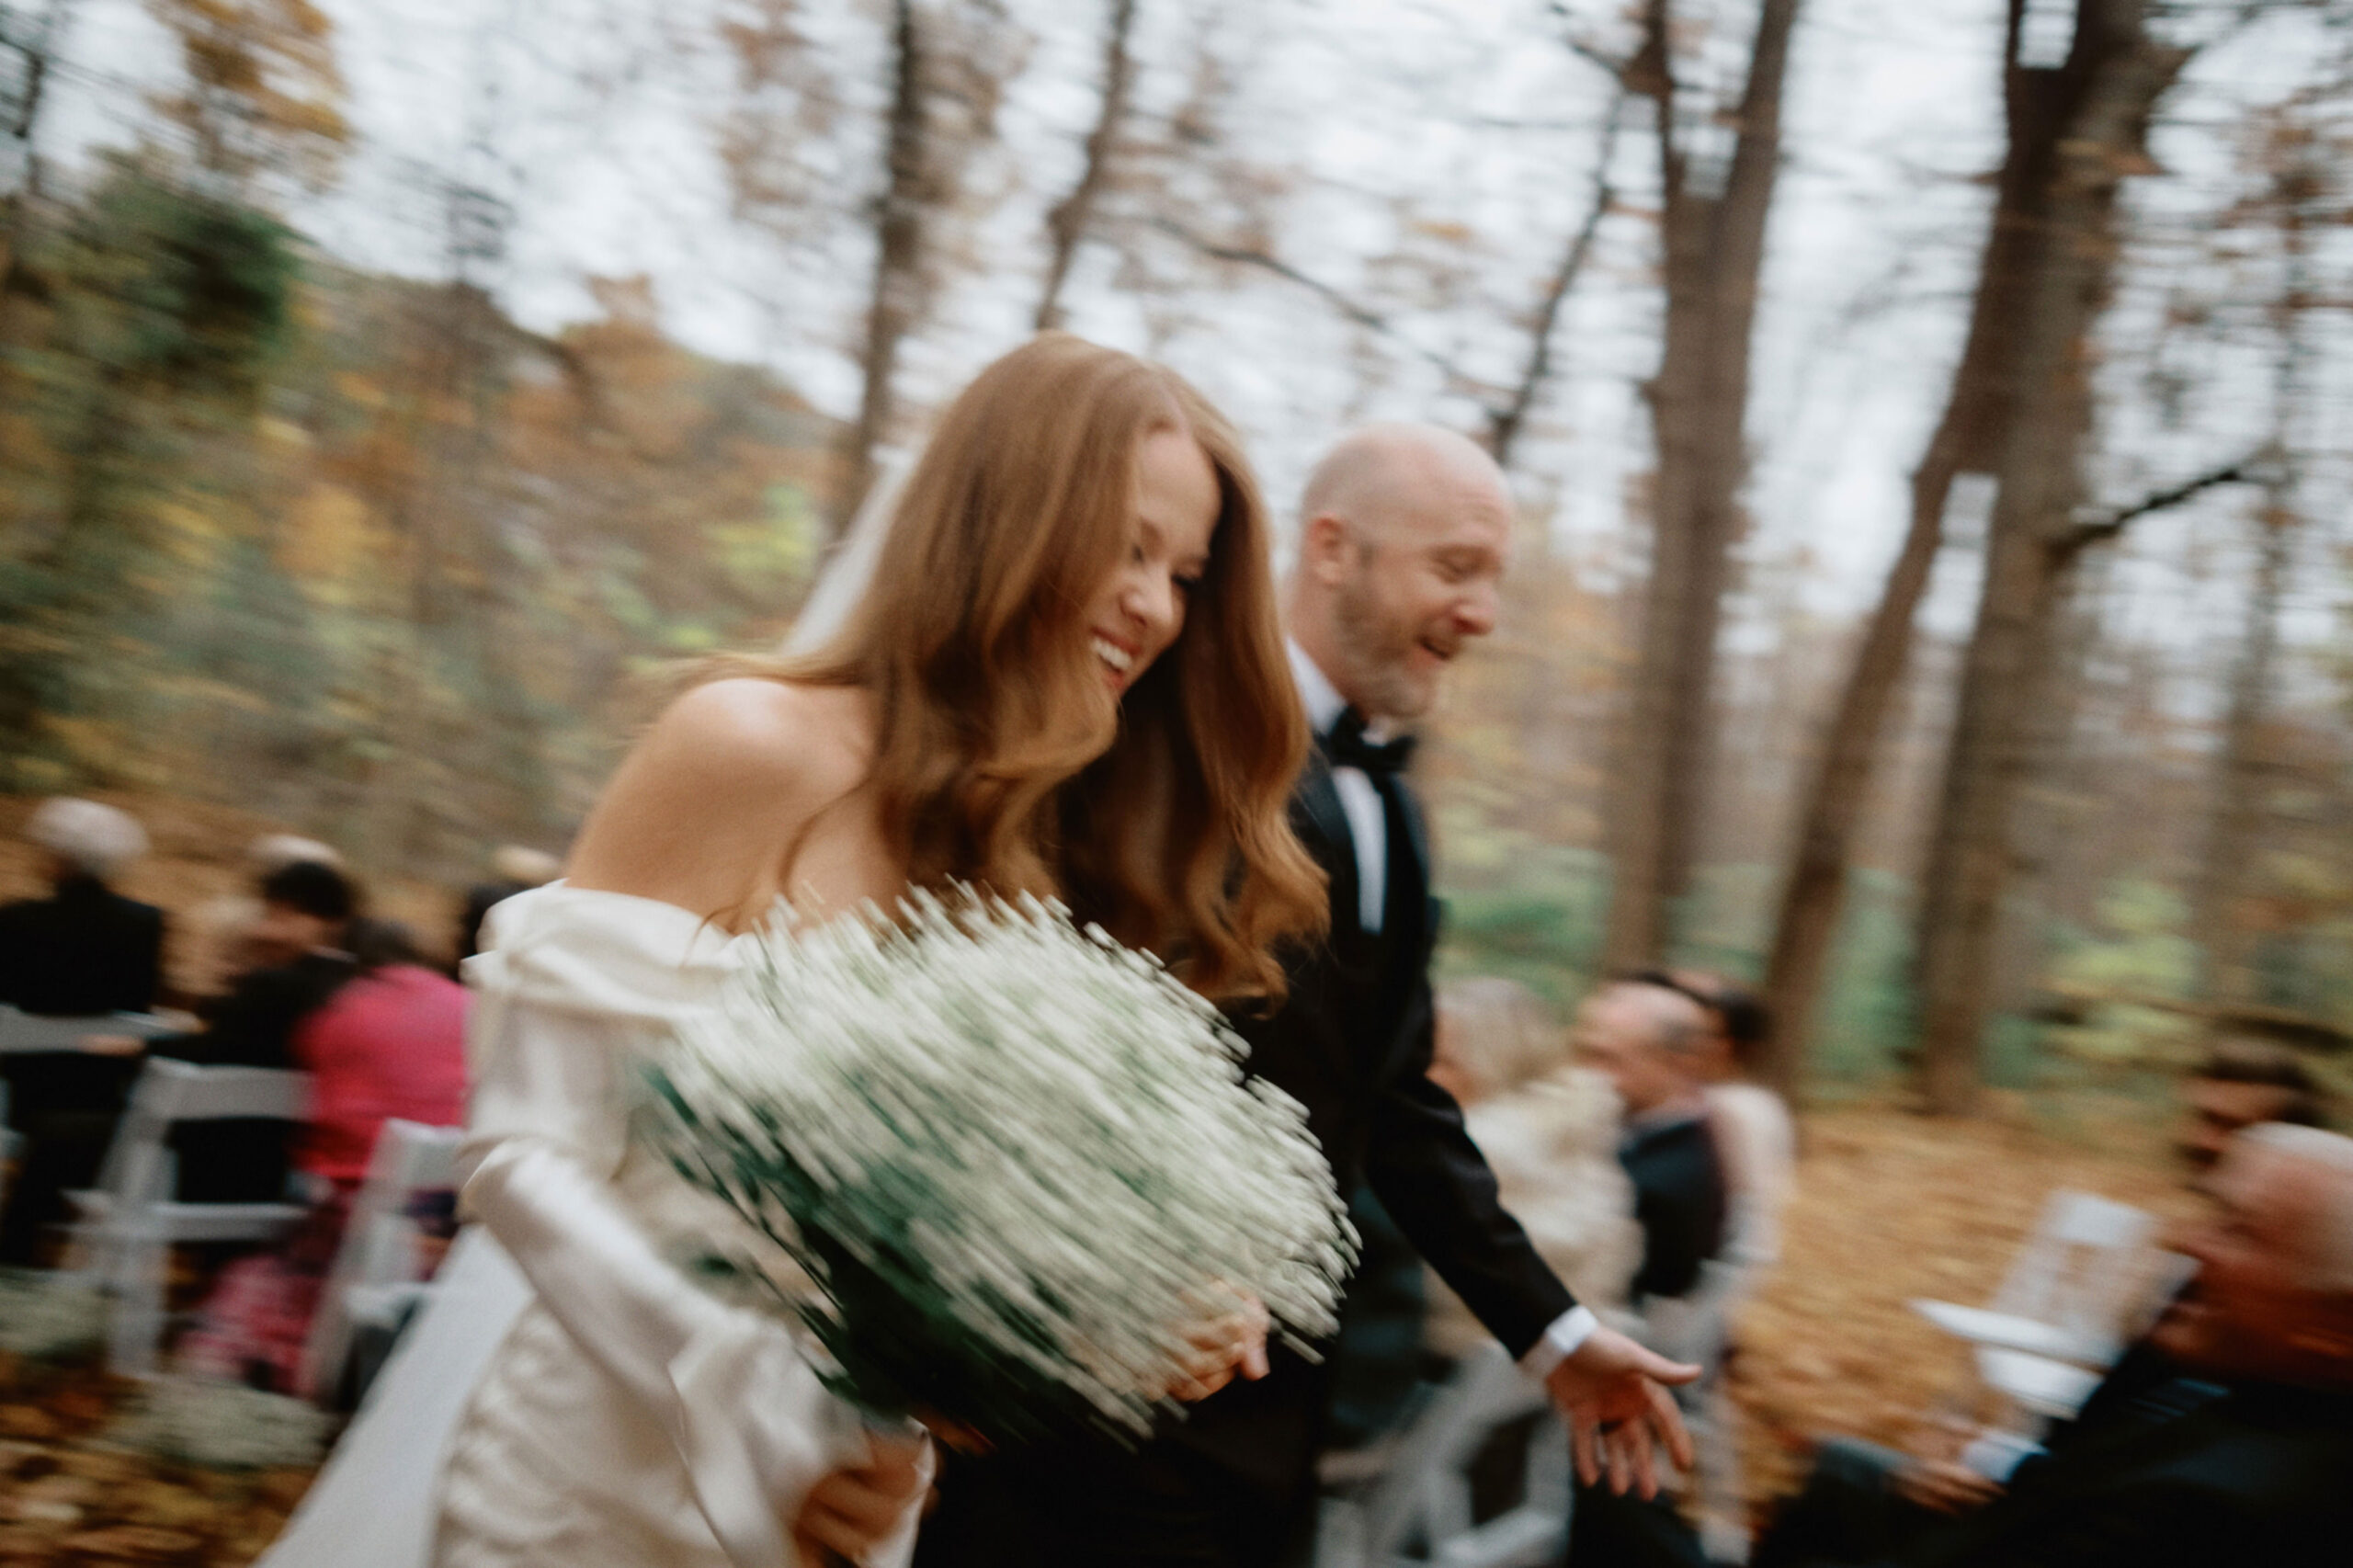 The newlyweds are happily walking back down the aisle. Documentary wedding photography image by Jenny Fu Studio